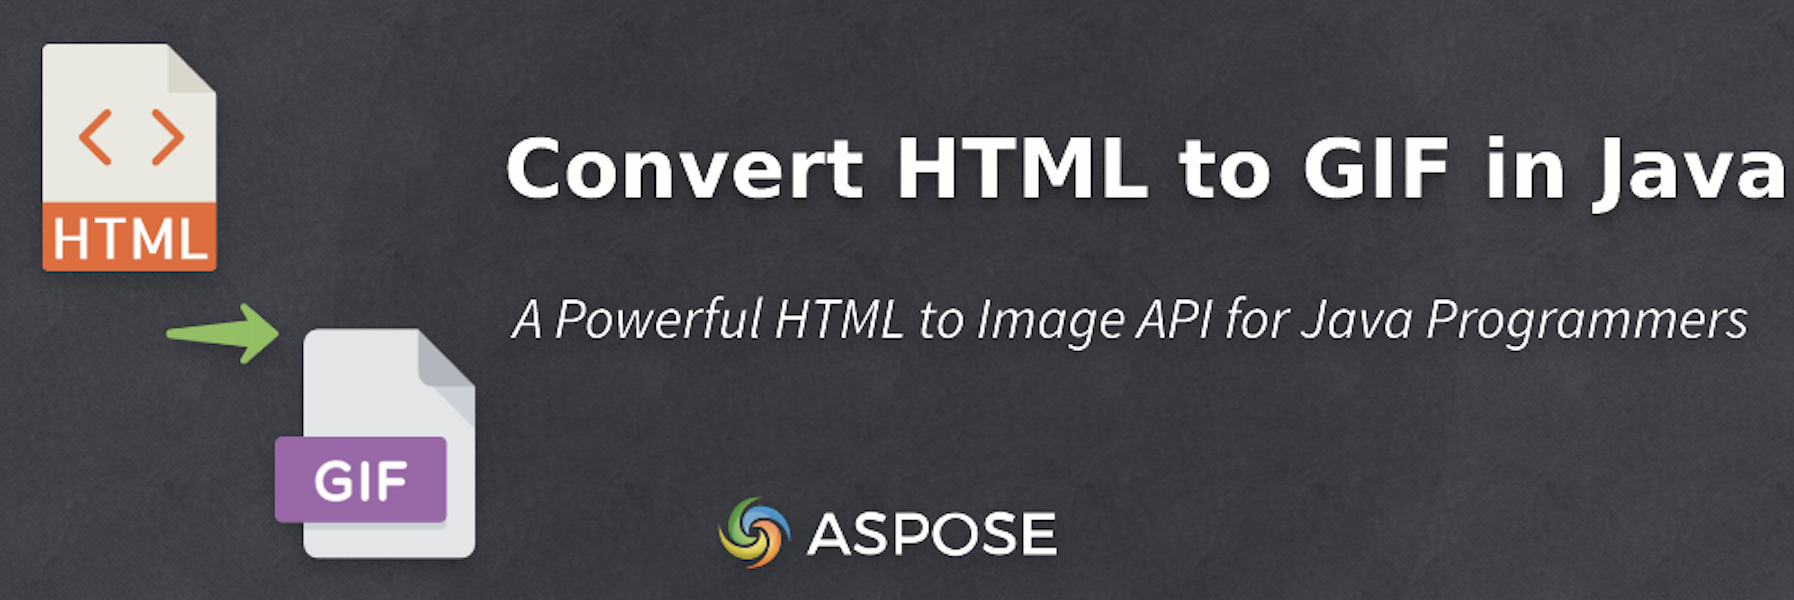 Convert HTML to GIF in Java Programmatically